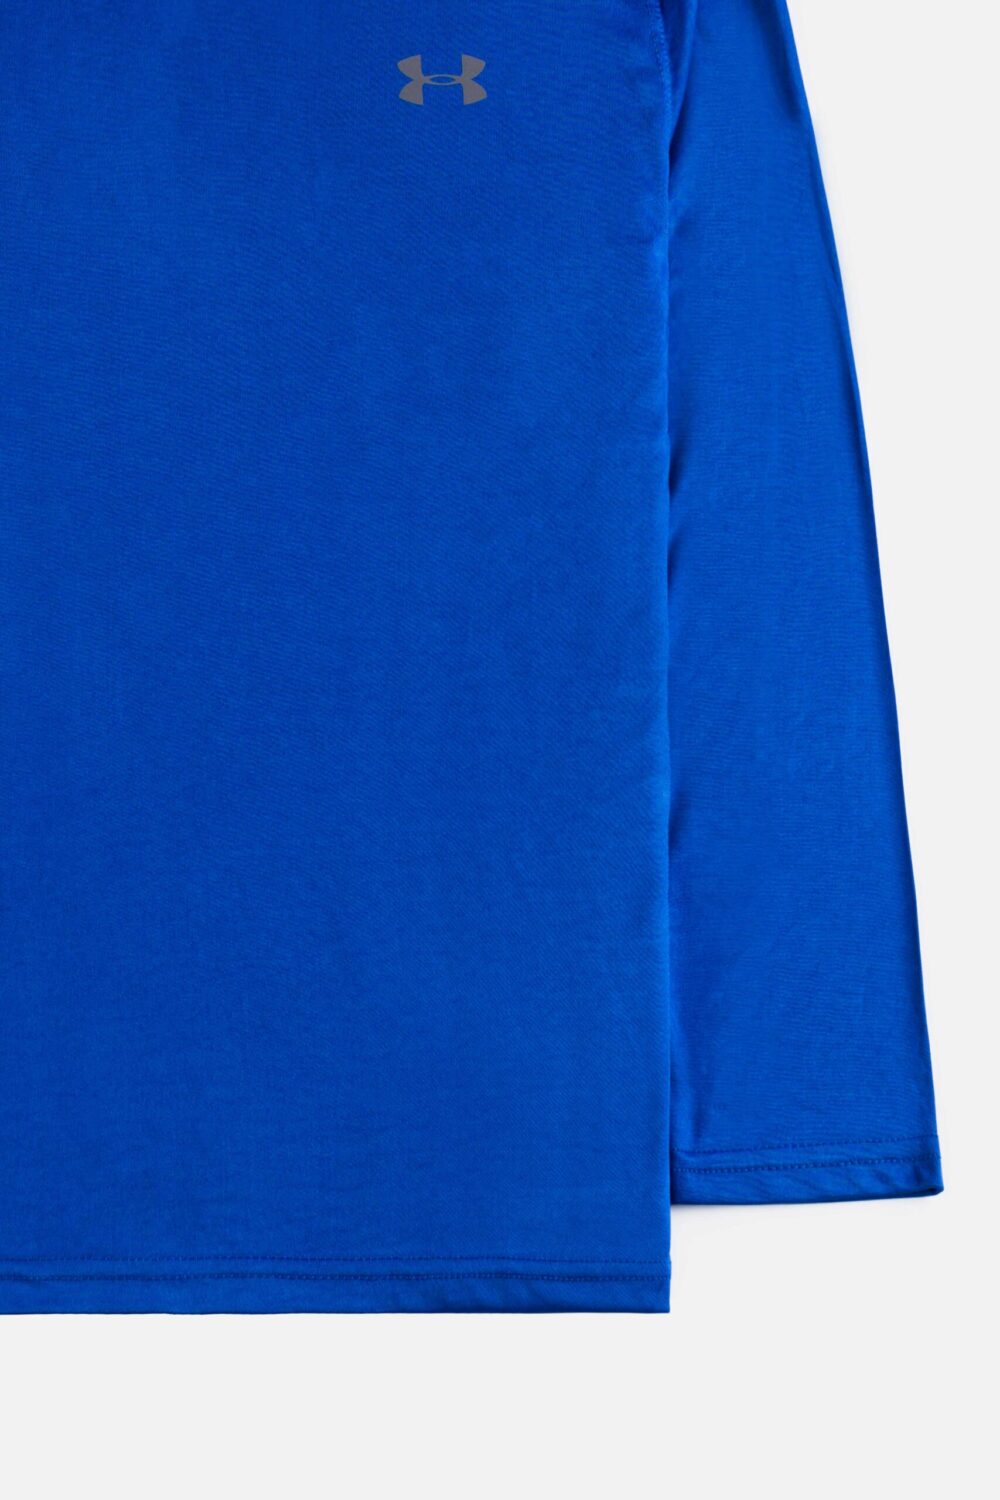 Under Armour Full Sleeves Dri-FIT T Shirt – Deep Blue